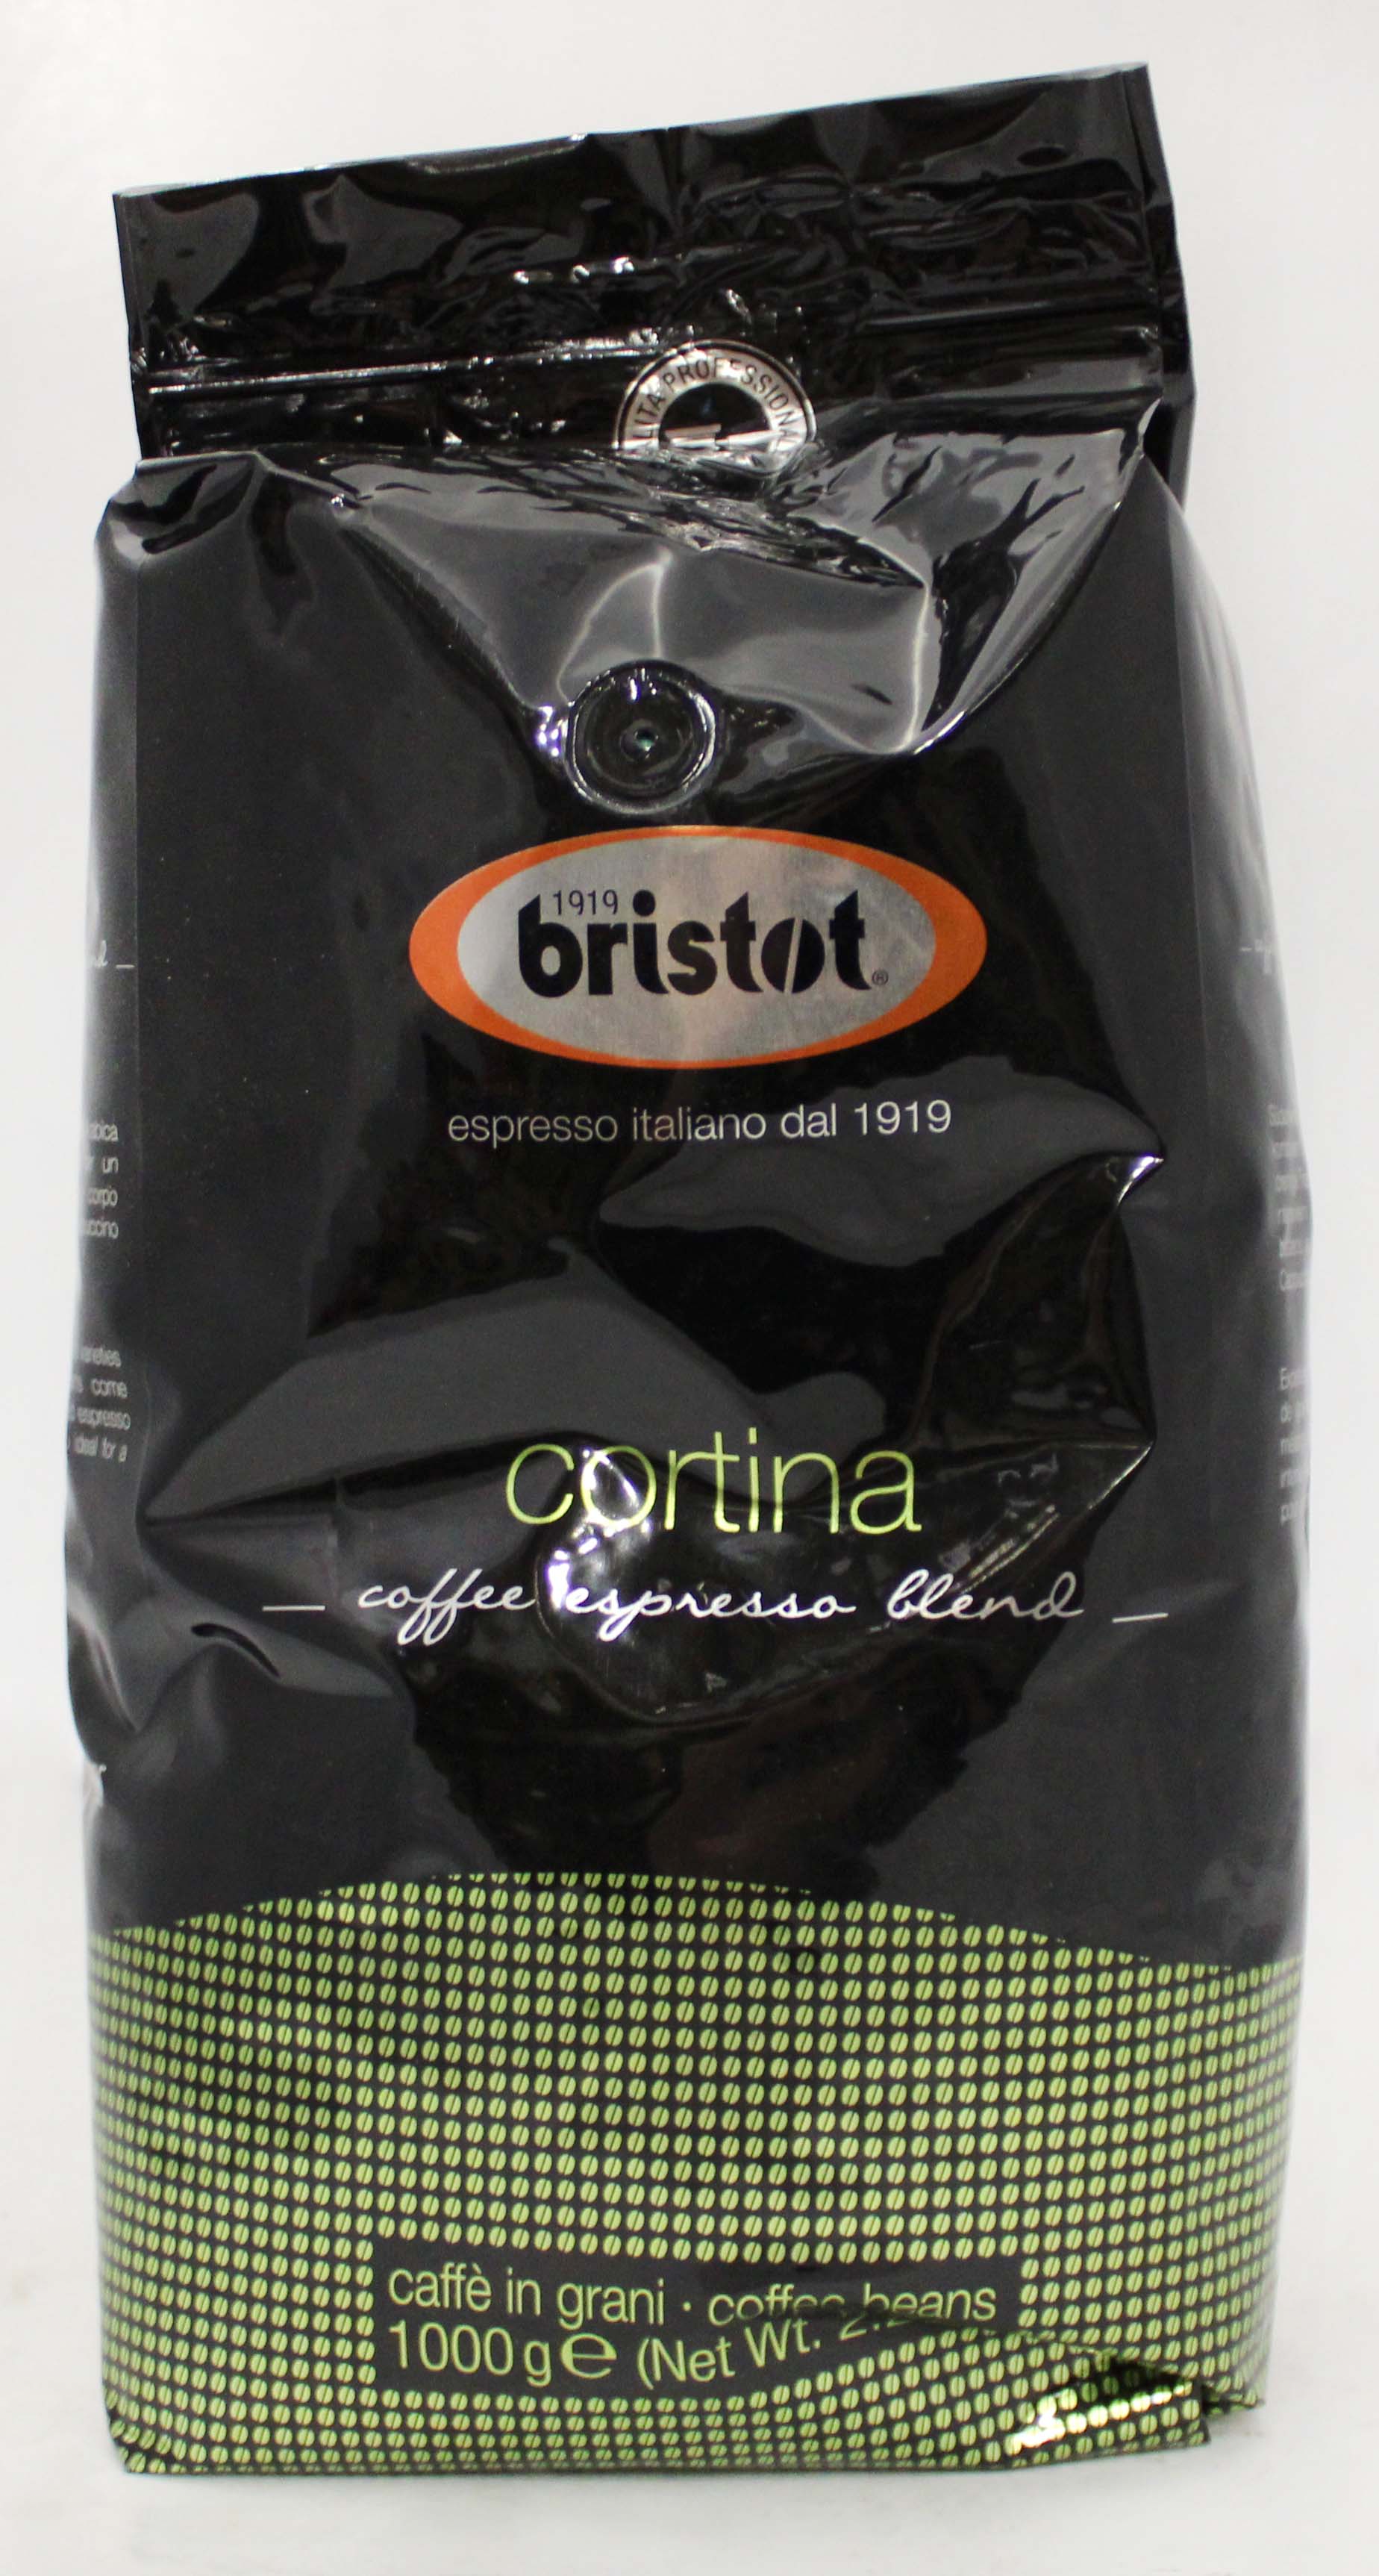 Bristot Cortina Caffee 1kg